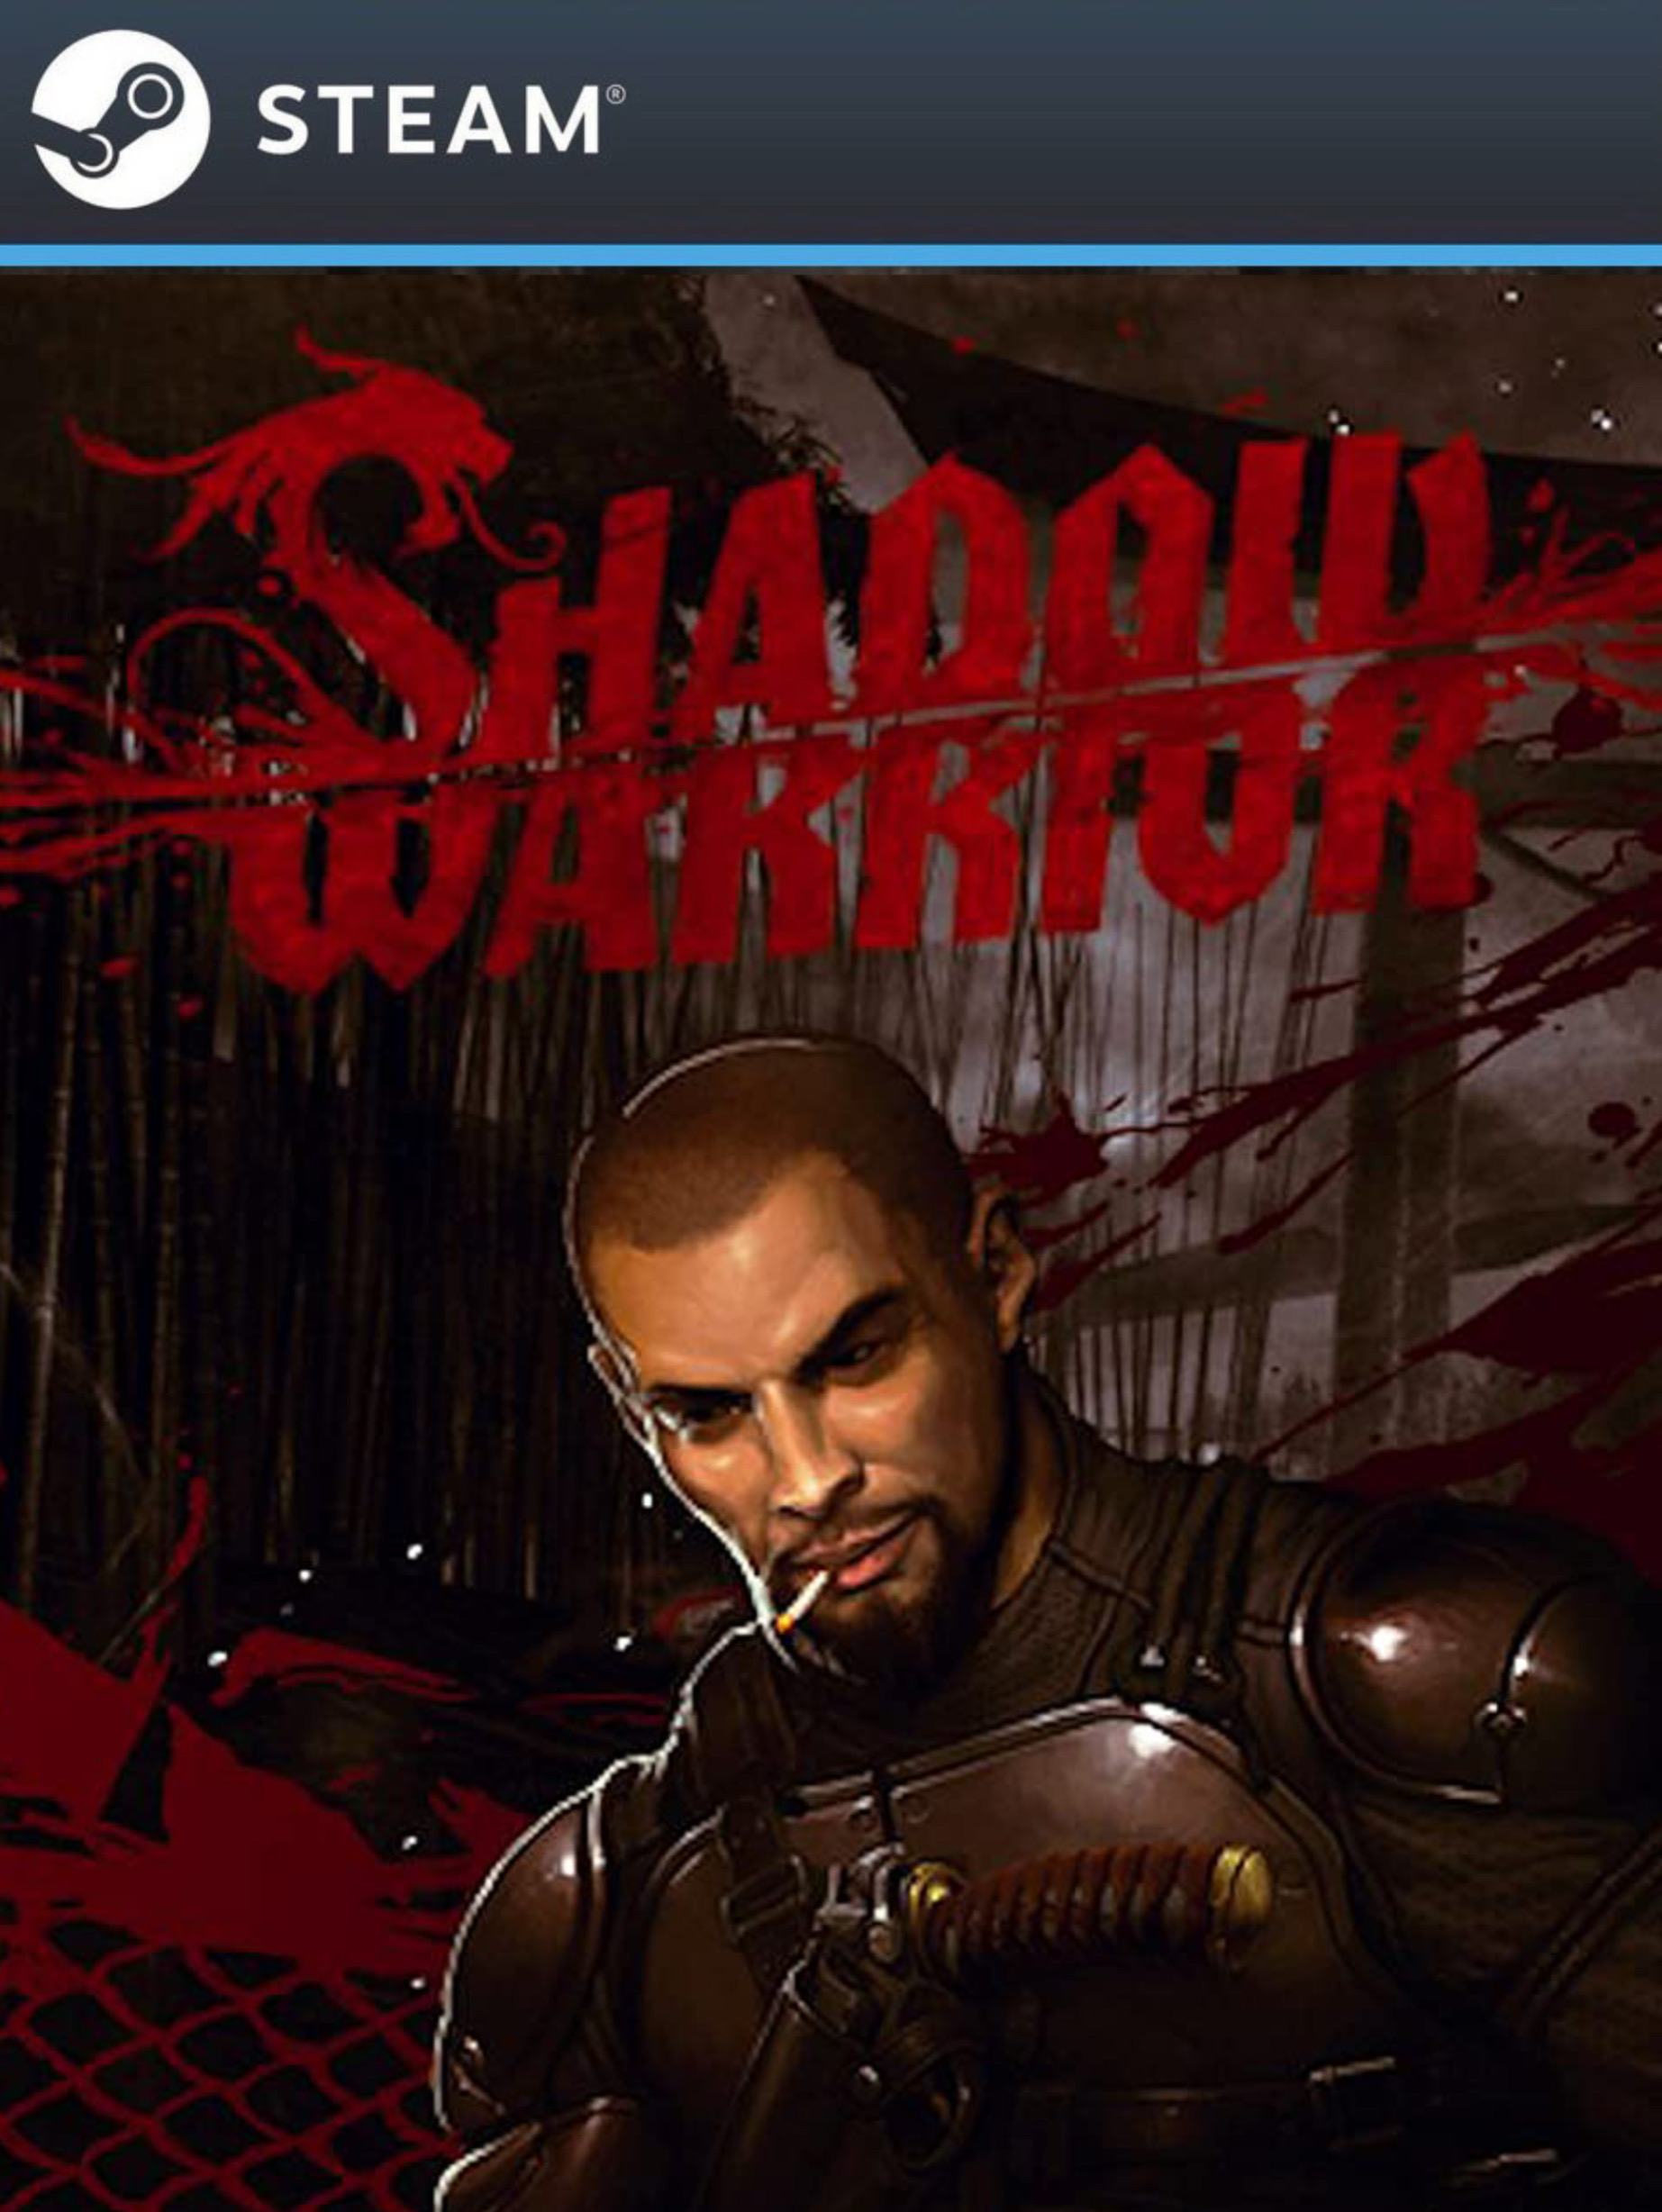 Обложка shadow. Shadow Warrior 3 Постер. Shadow Warrior 1997 обложка. Шадоу Варриор 1.